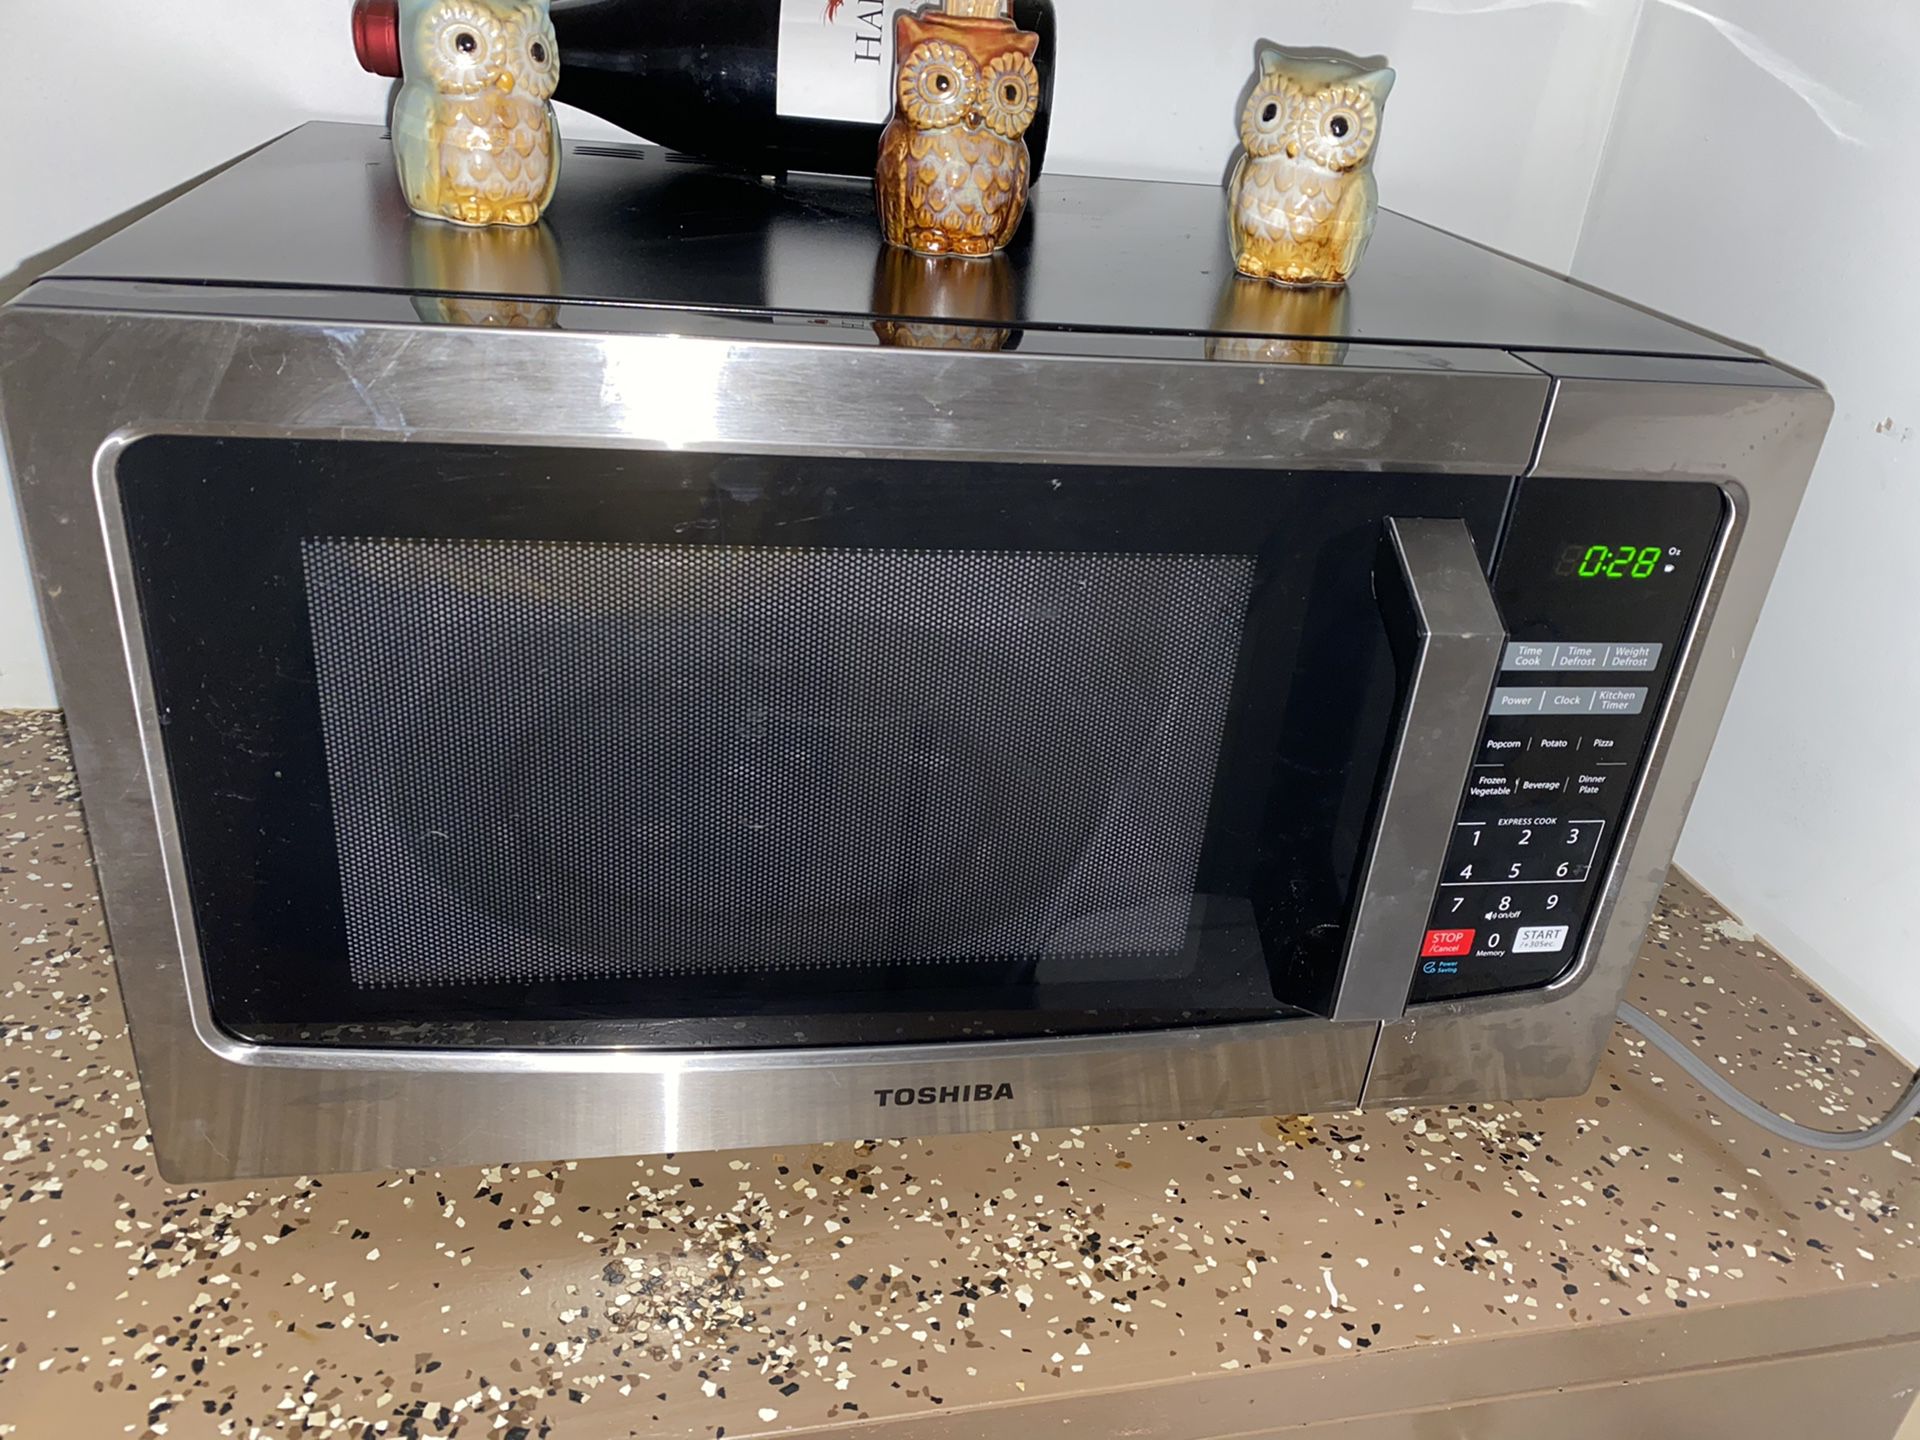 Toshiba microwave